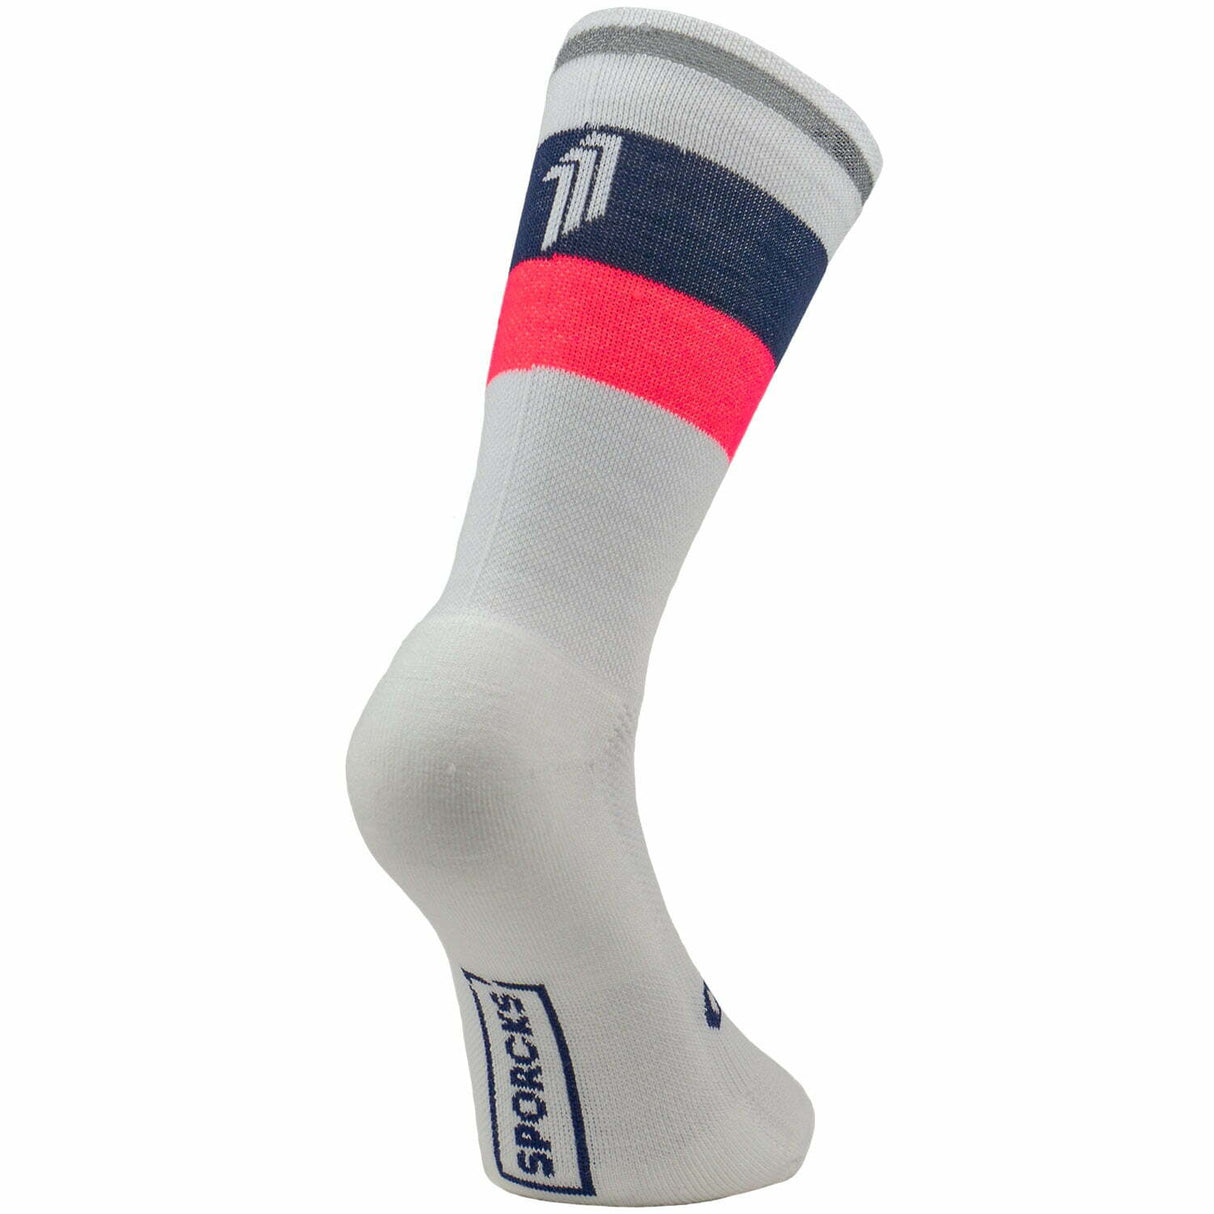 Sporcks Sub 0 Reflective - Merino Cycling Socks - Cam2